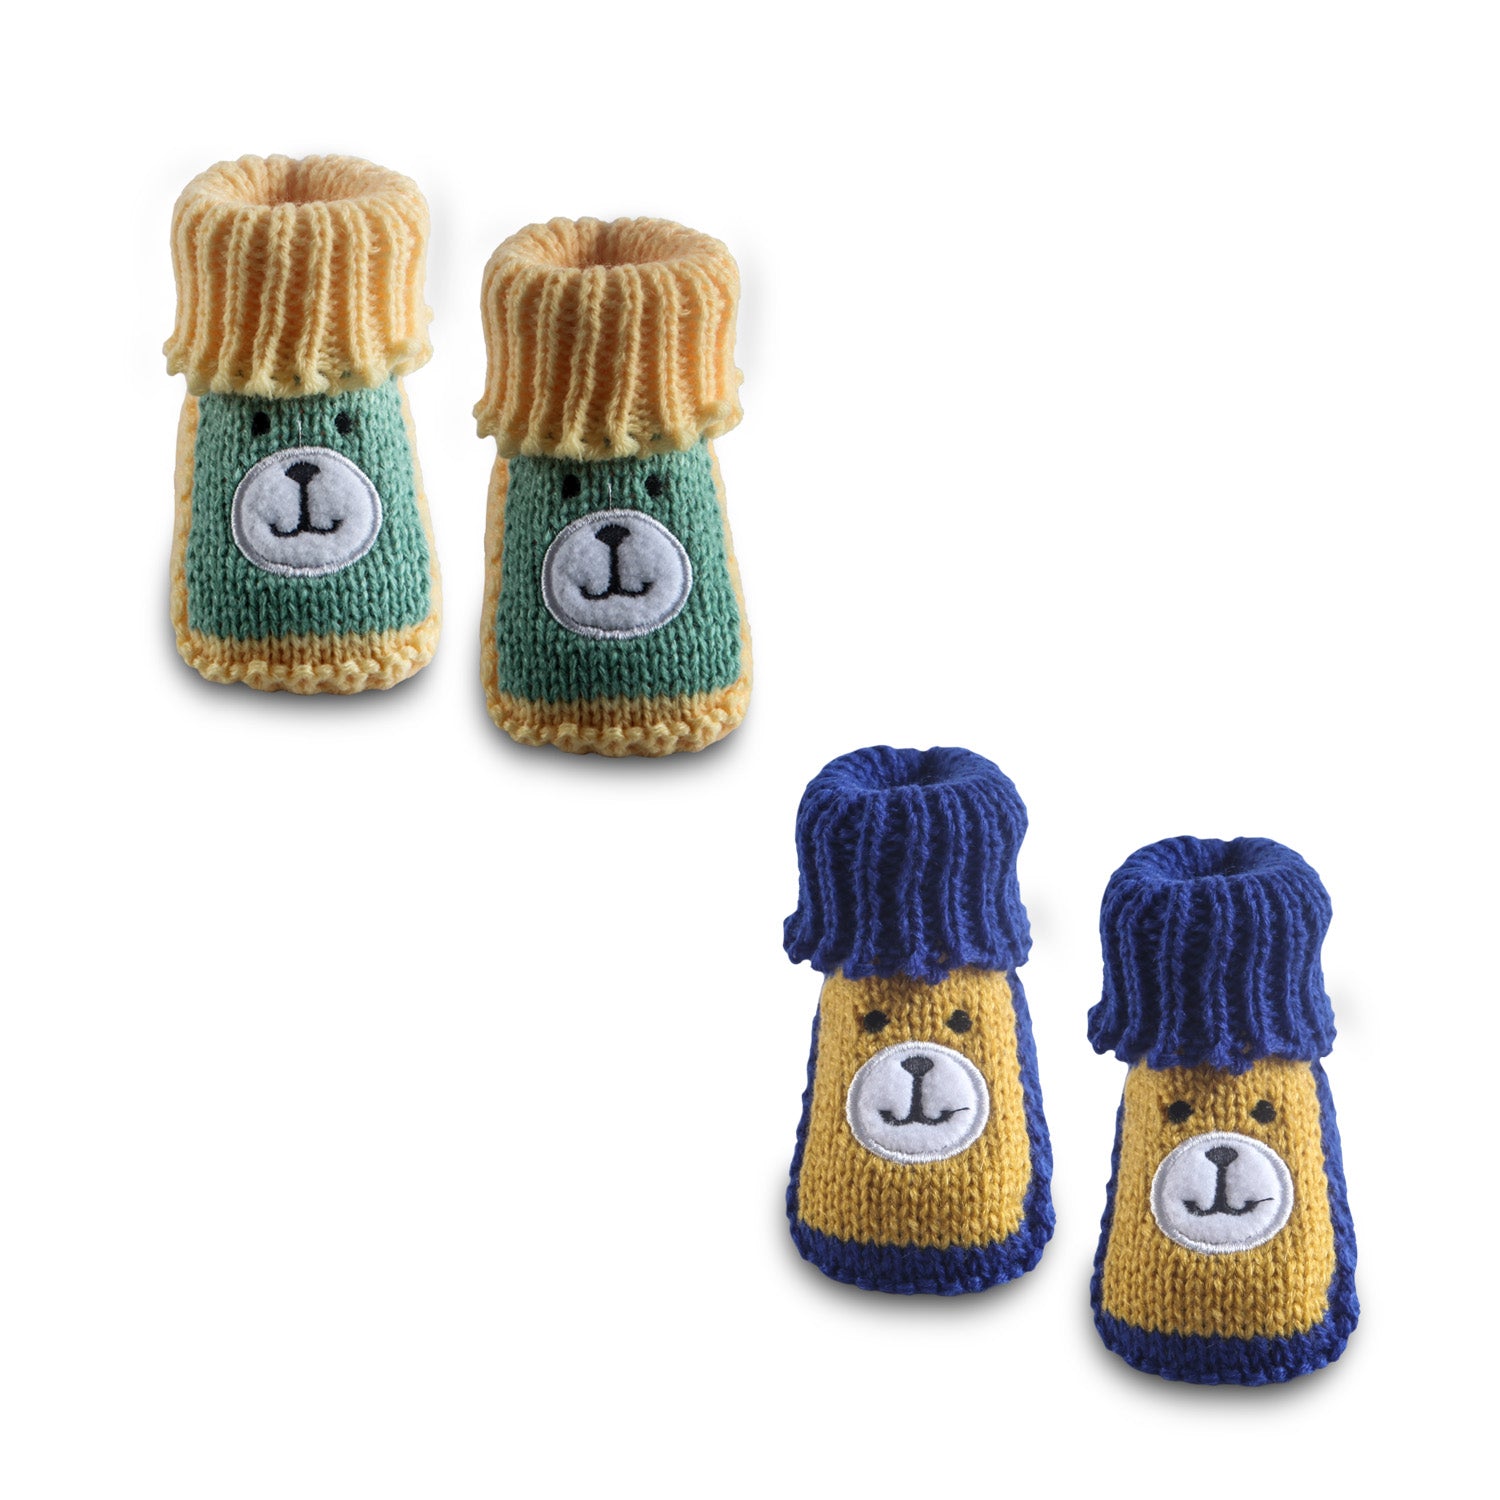 Newborn Crochet Woollen Booties Teddy - Yellow, Blue